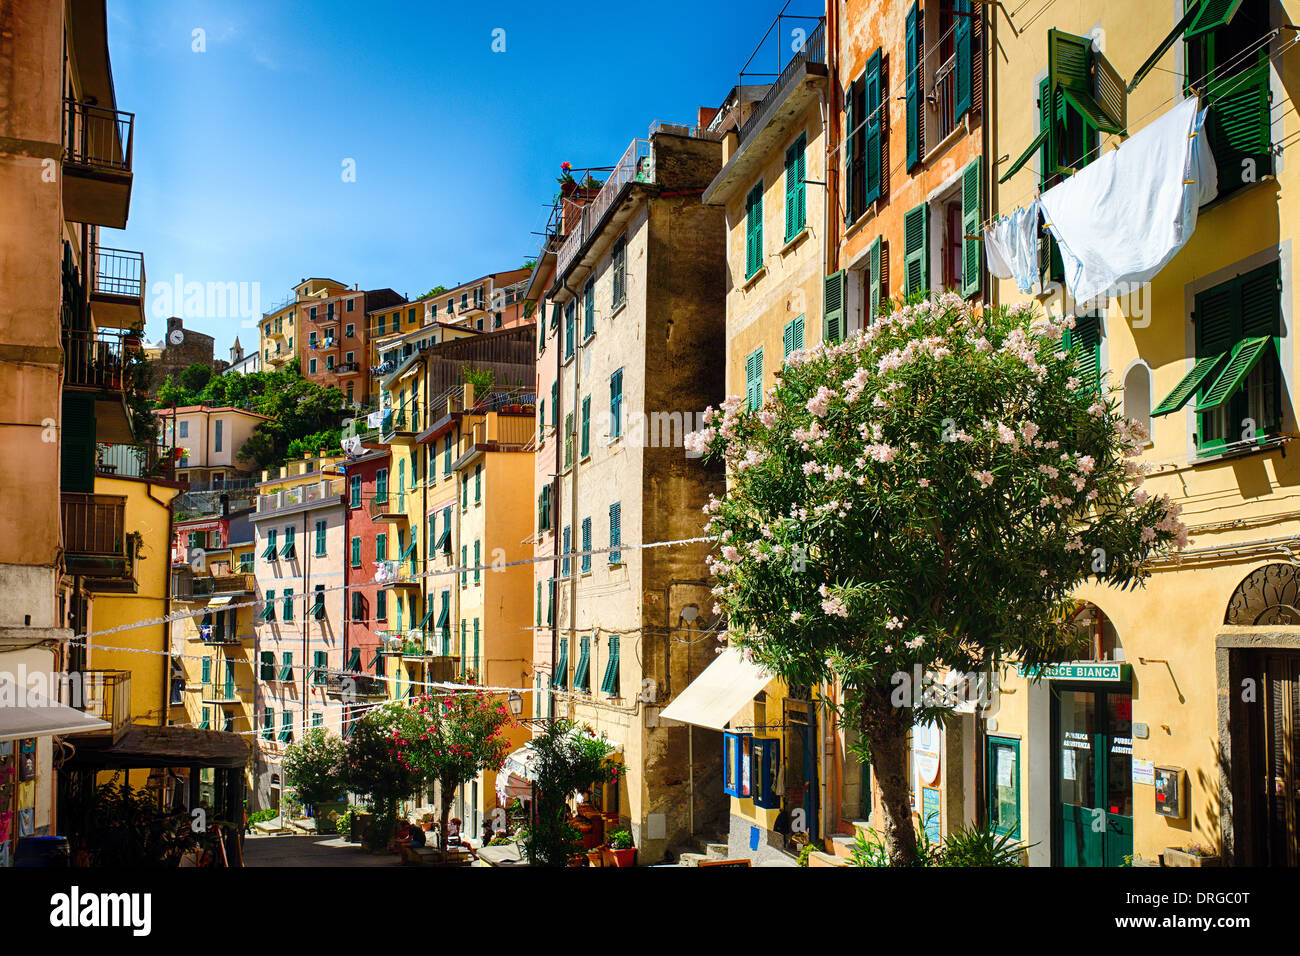 Rue colorée de Riomaggiore, Cinque Terre, ligurie, italie Banque D'Images